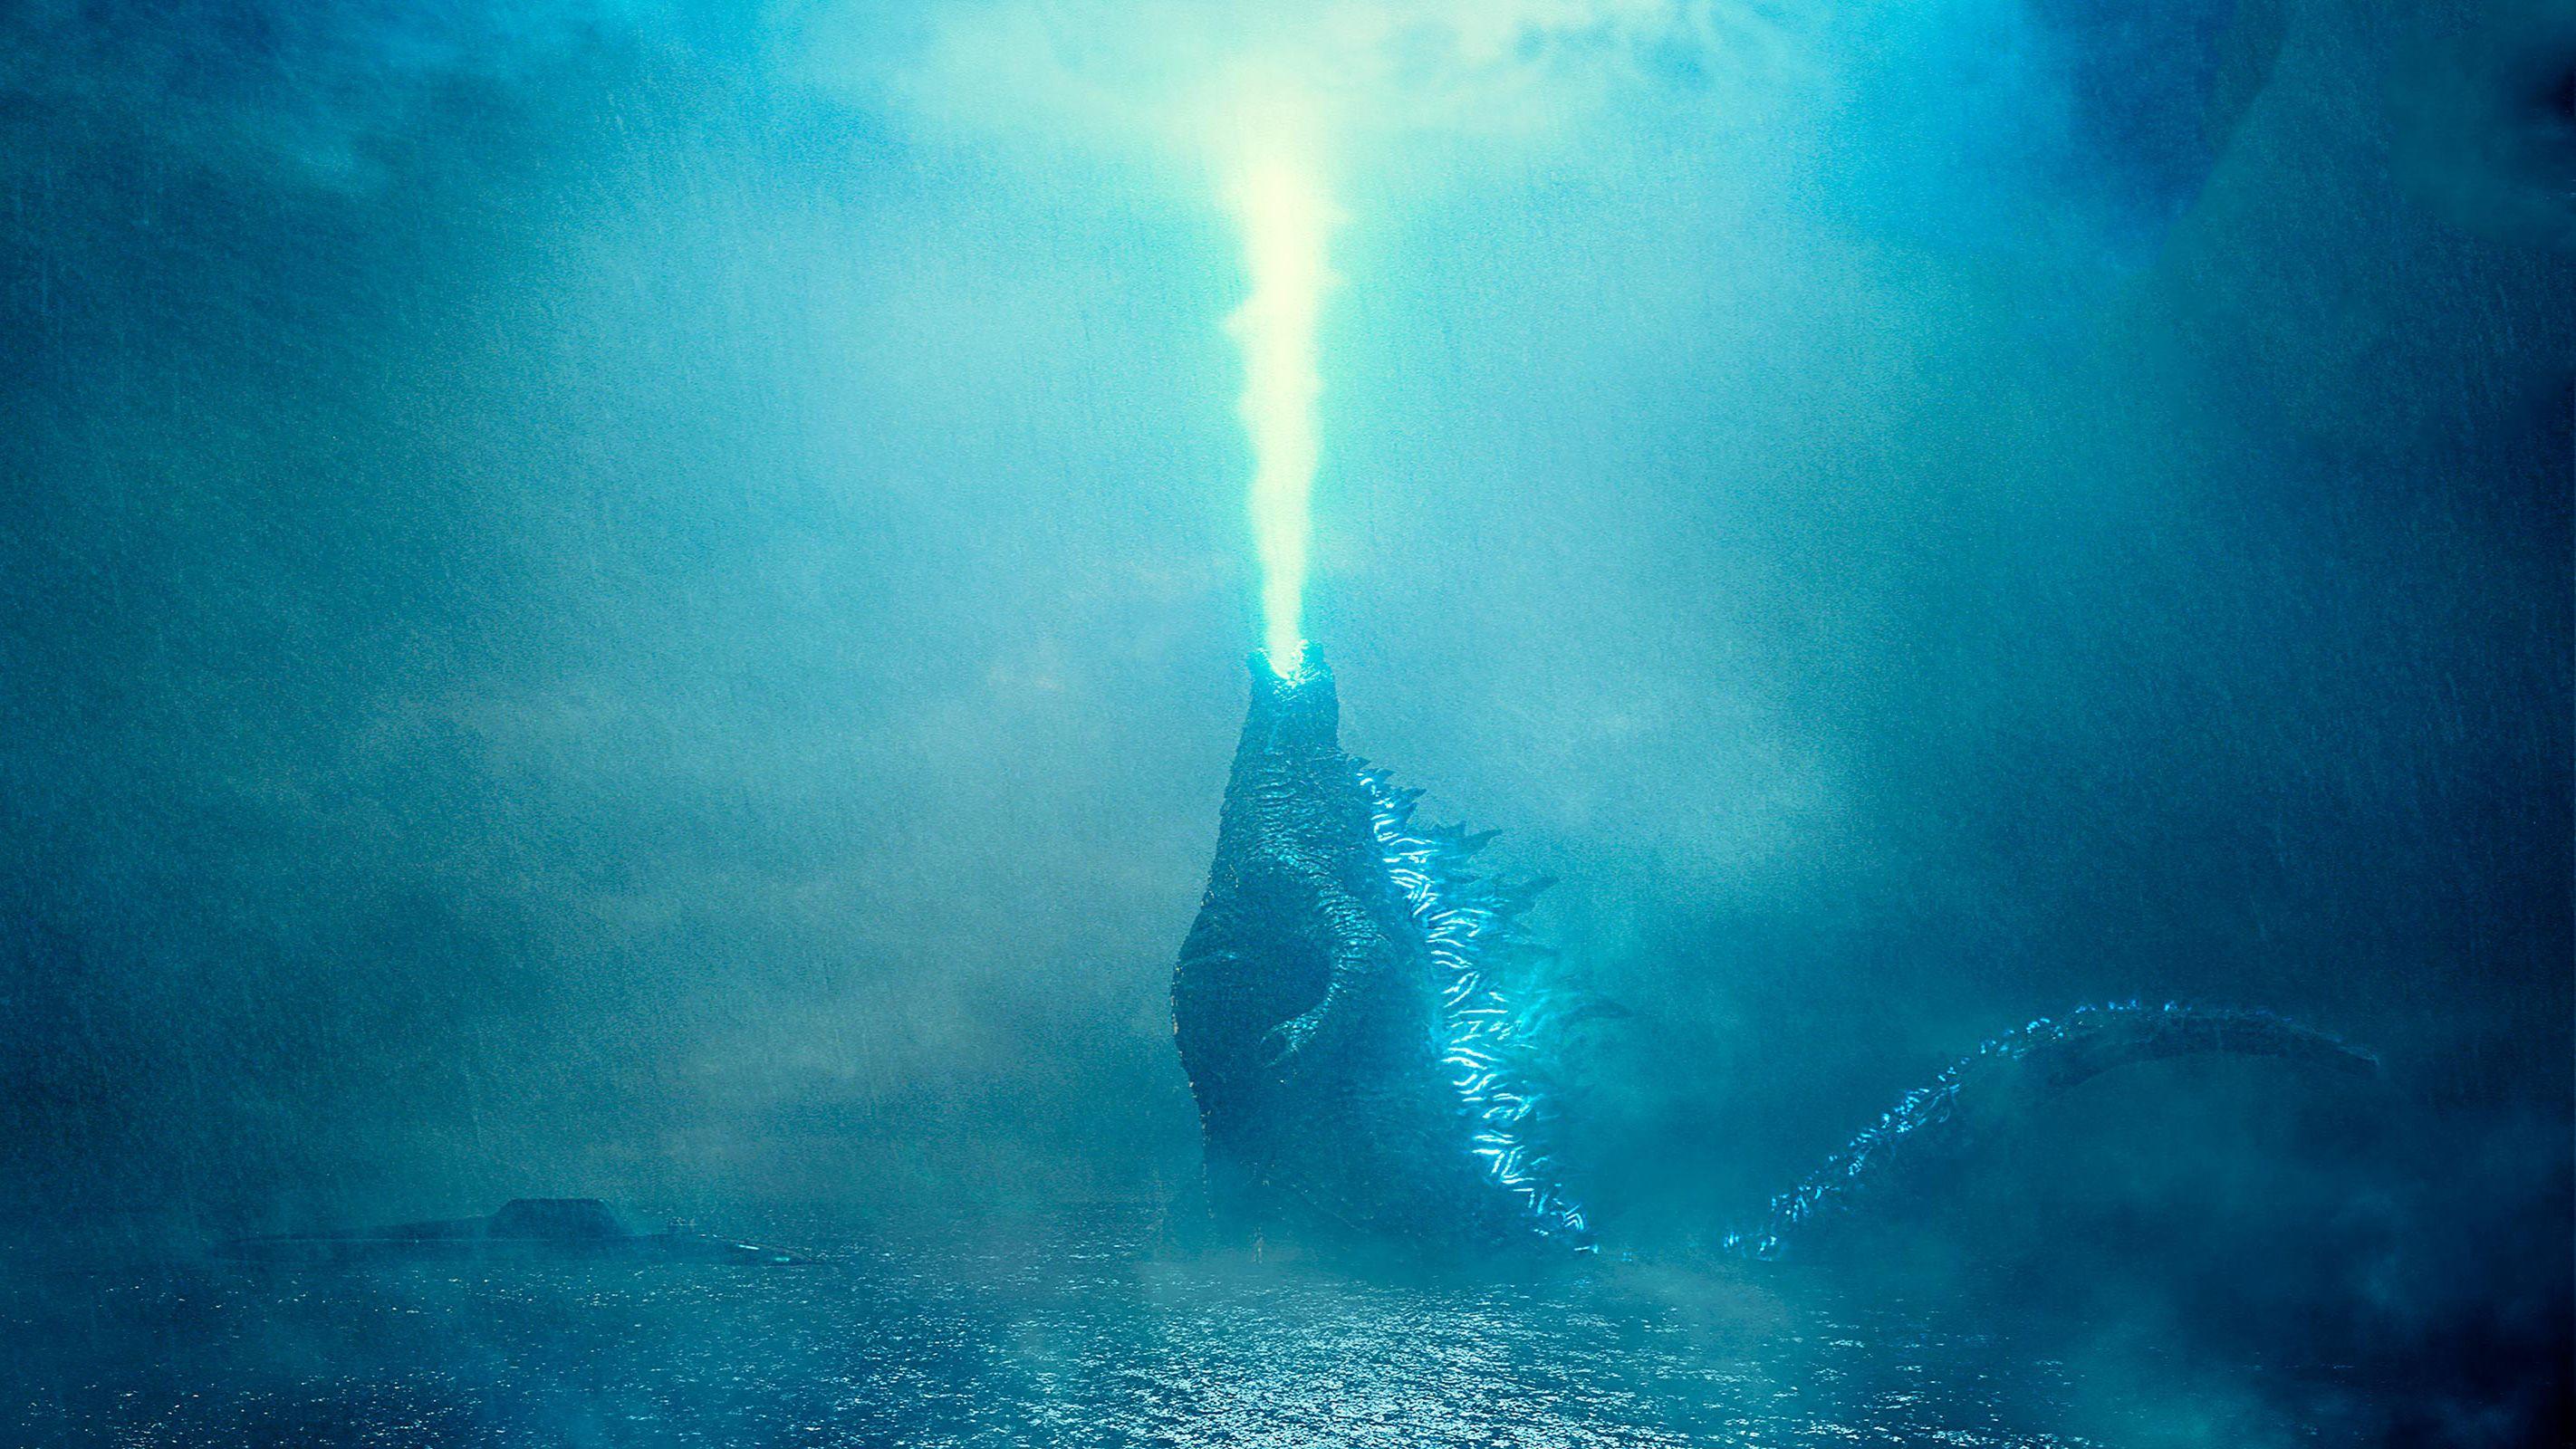 Godzilla Atomic Breath Live Wallpaper